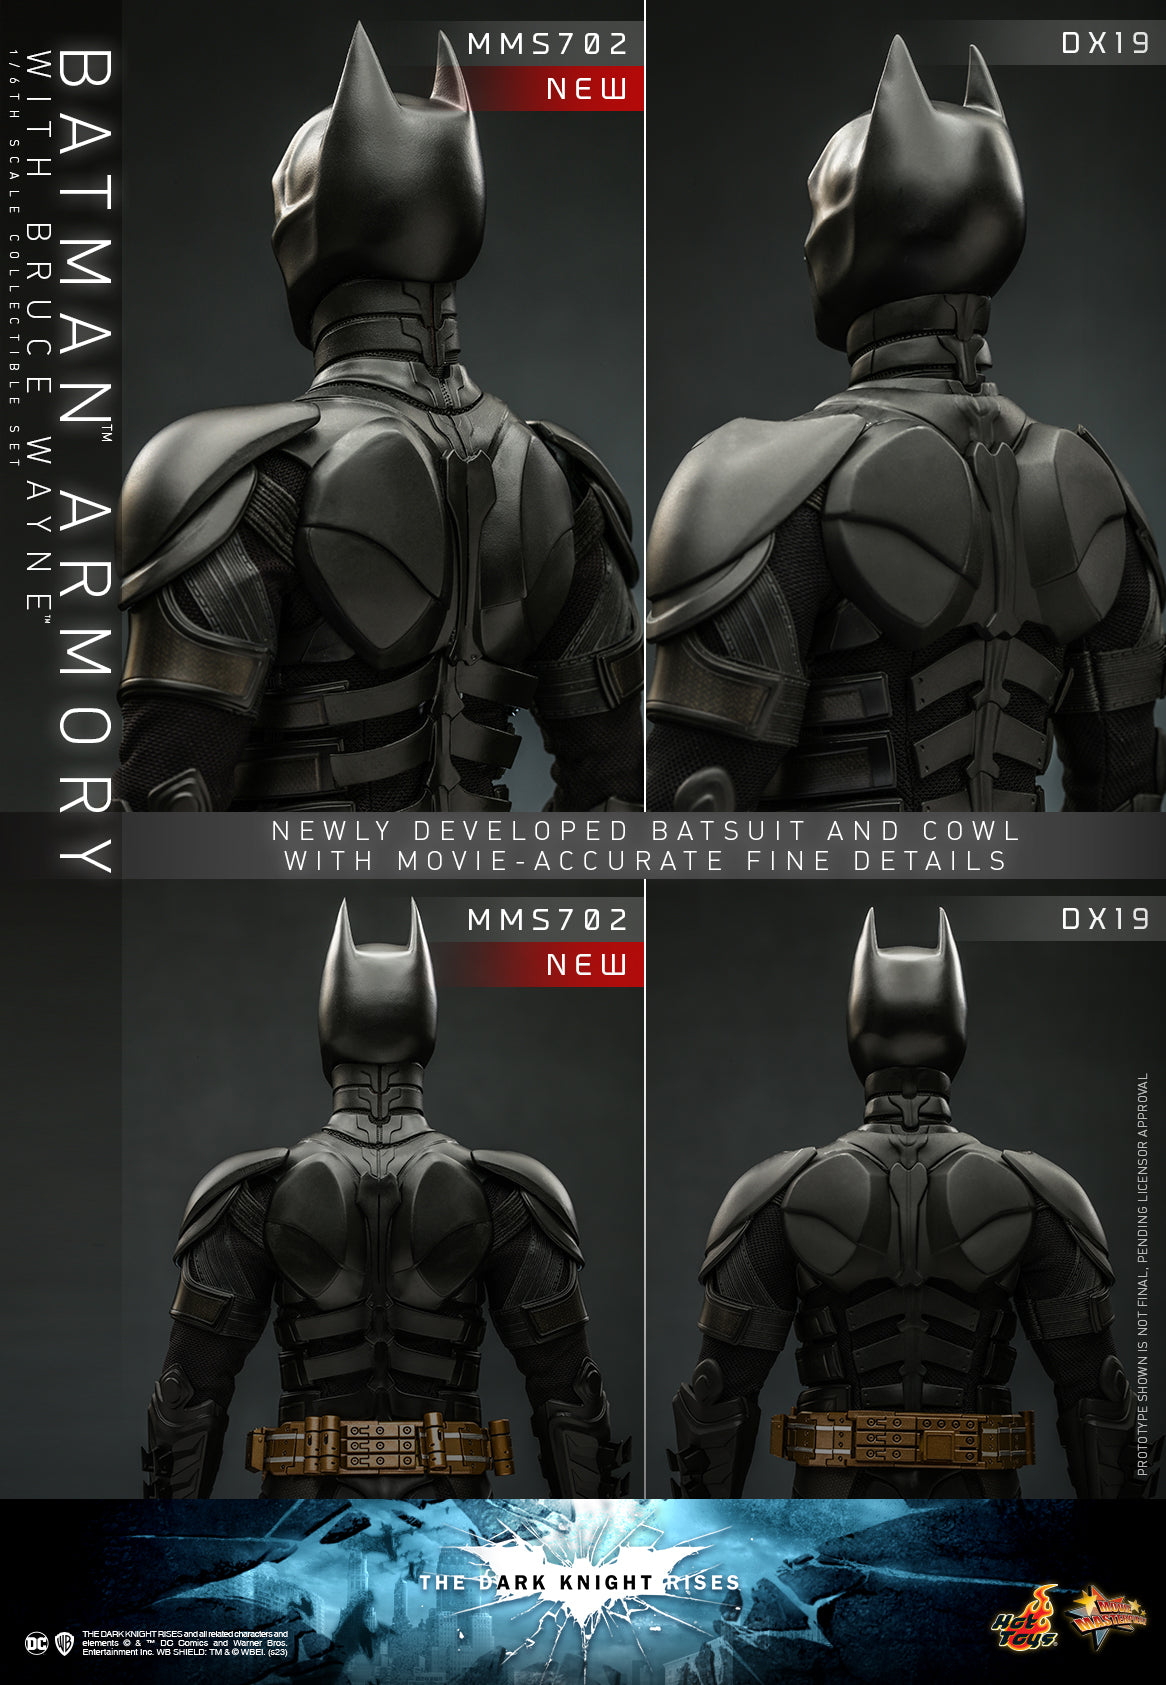 Hot Toys - MMS702 - The Dark Knight Rises - Batman Armory with Bruce Wayne - Marvelous Toys